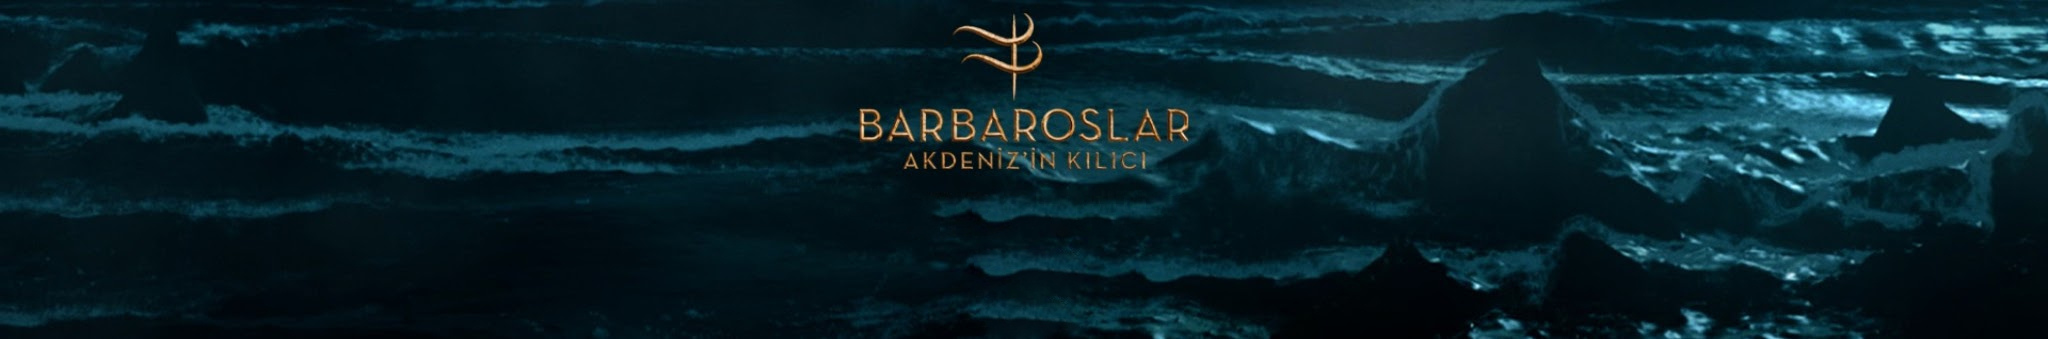 Barbaros Season 1 English subtitles